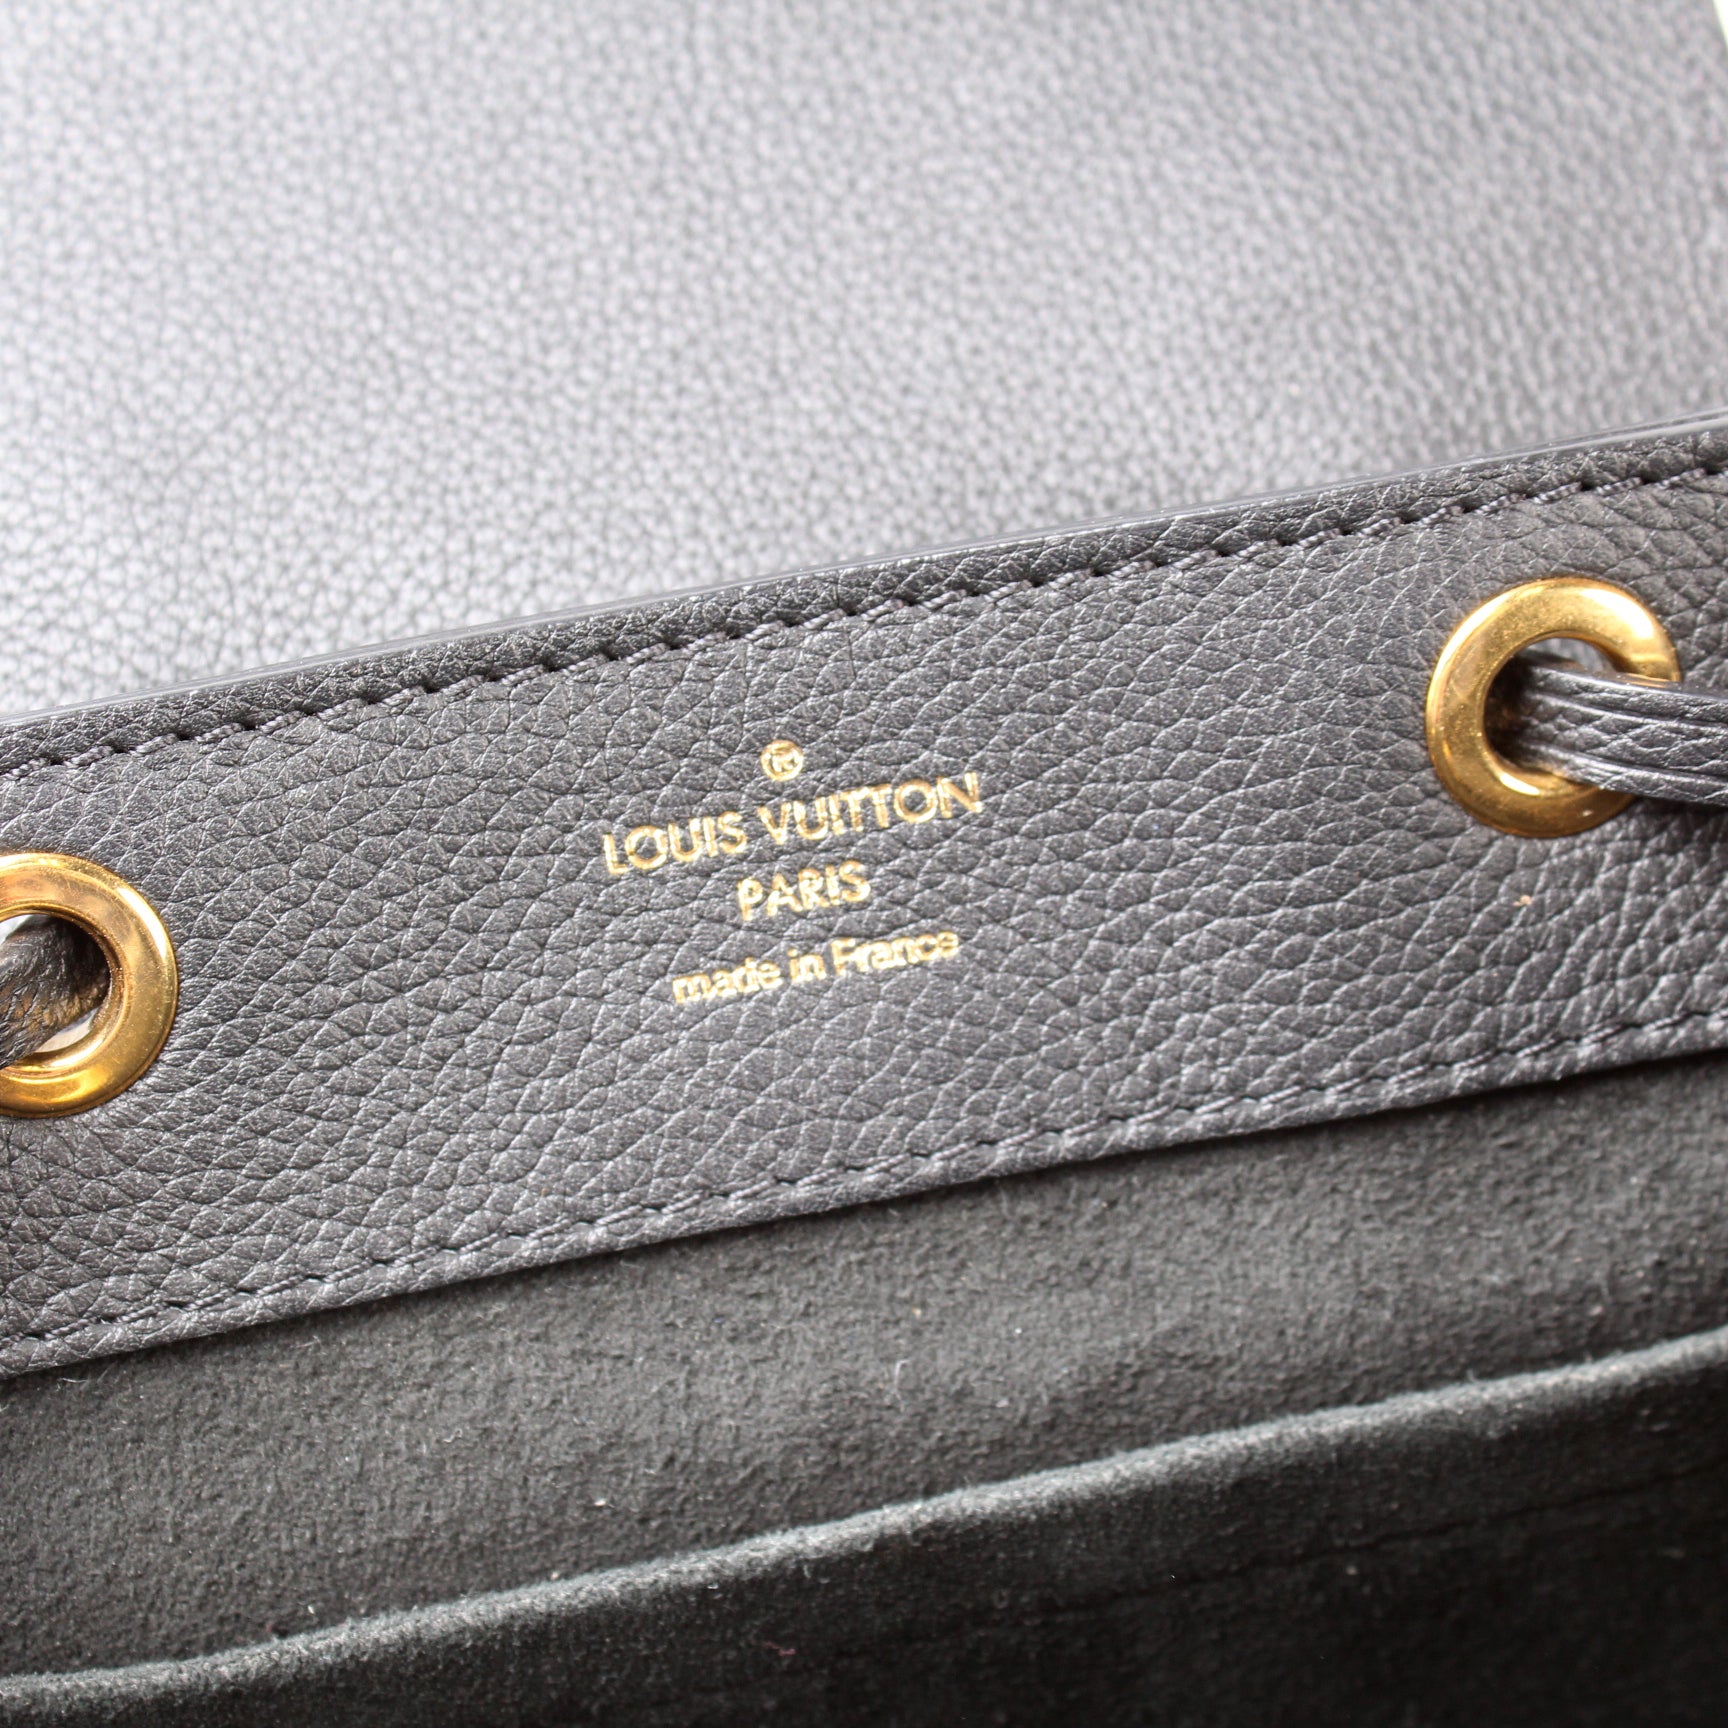 Lock Me Mini Backpack, Louis Vuitton - Designer Exchange